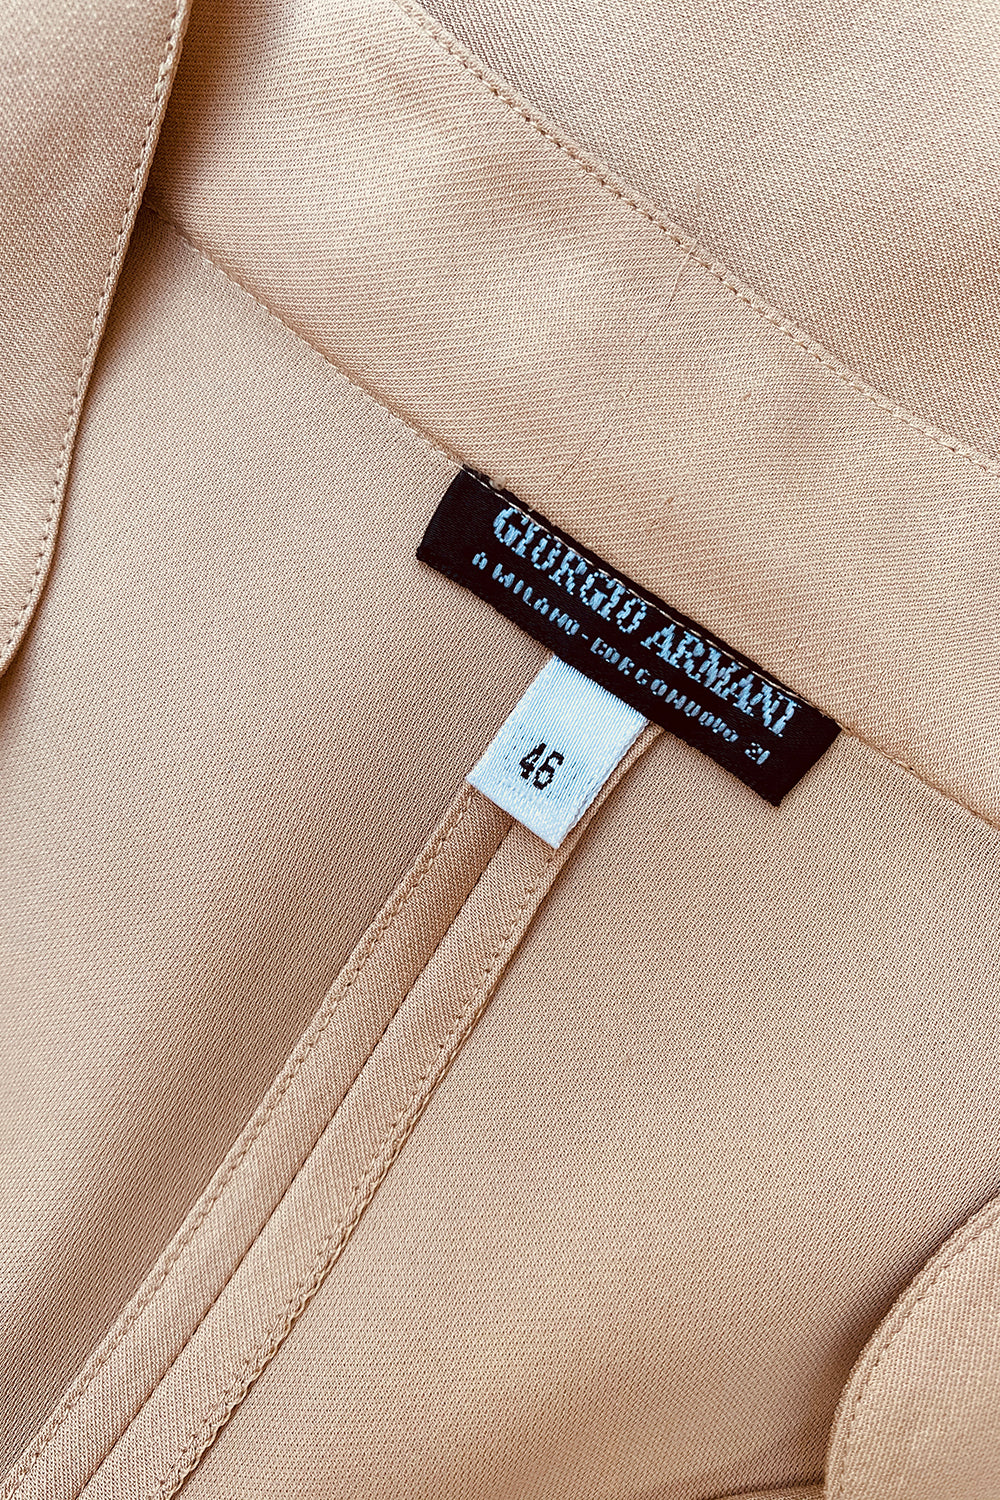 Georgio Armani Vintage Silk Shirt / Jacket Size S-M